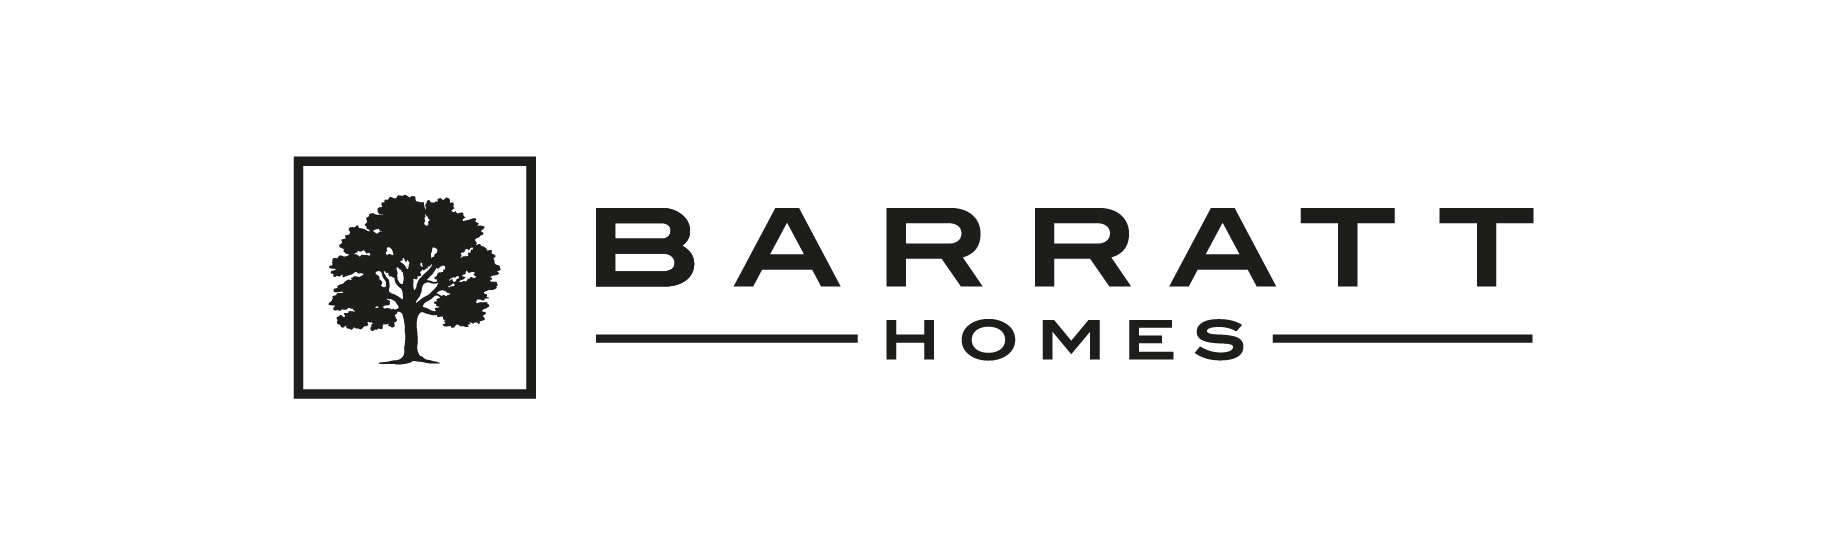 Barratt Developments North East logo